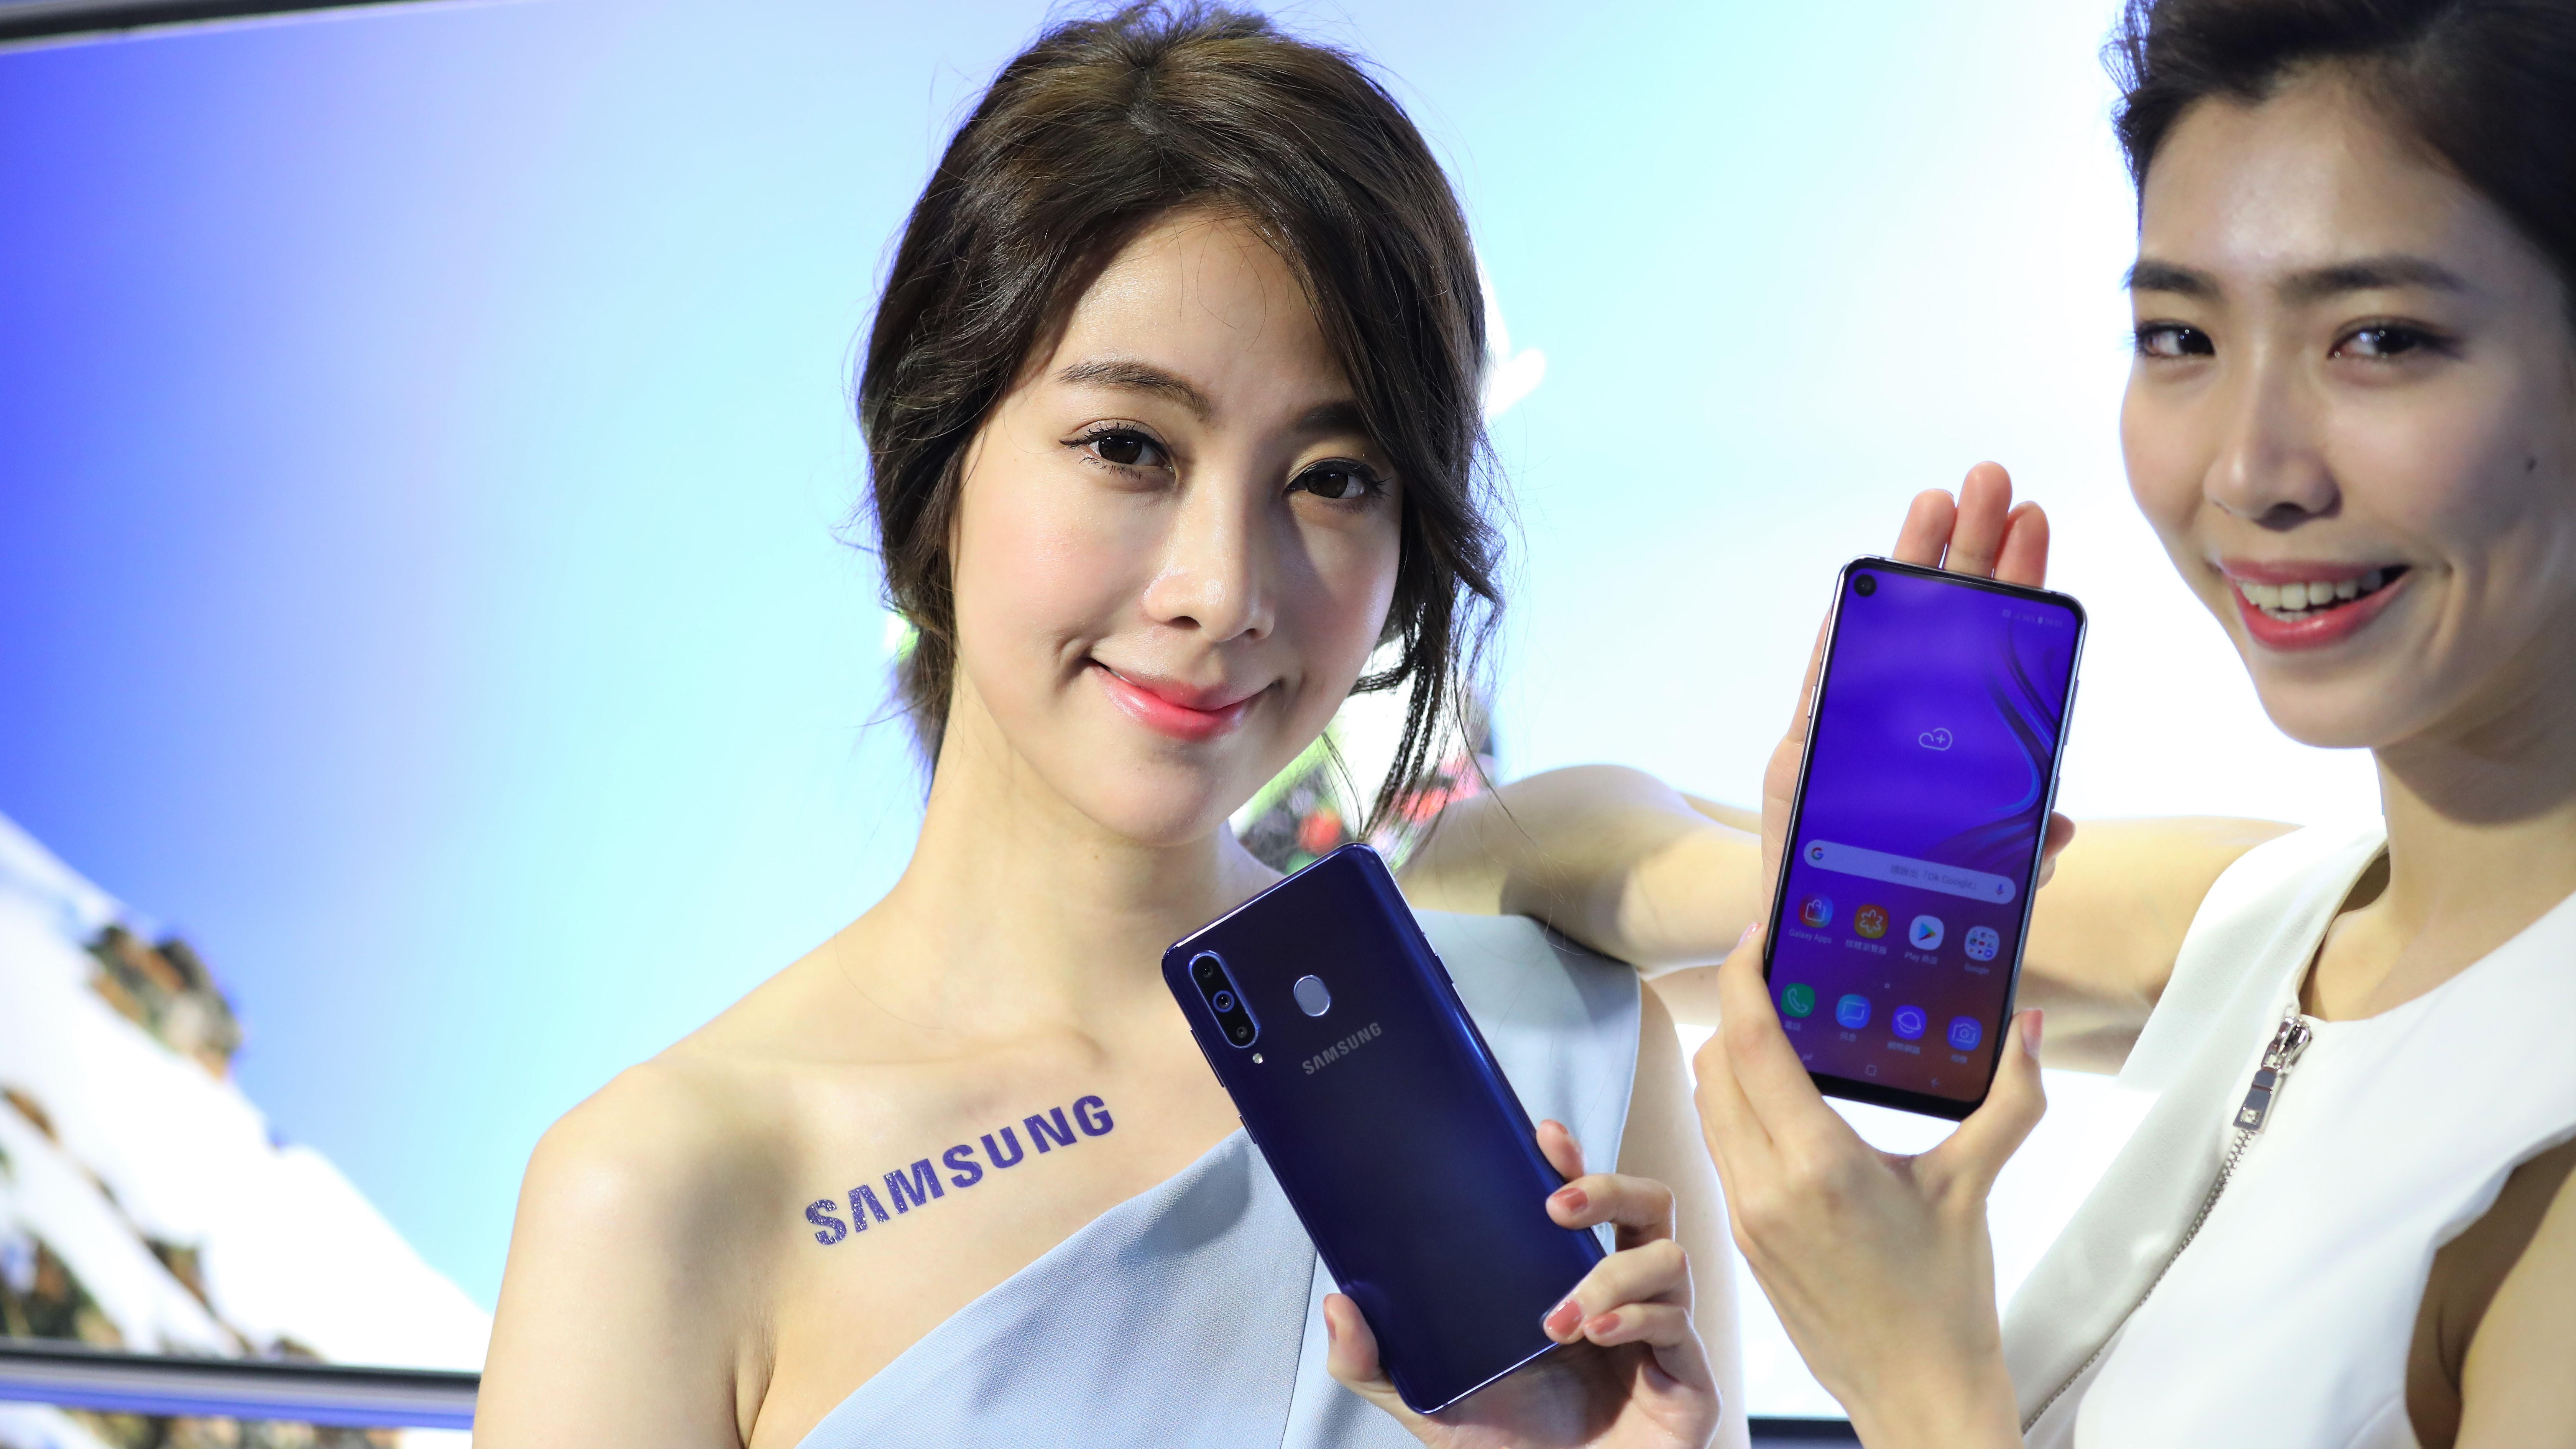 Samsung A8s 搶先看 - A8s, Galaxy, Samsung, 三星 - 科技狗 3C DOG